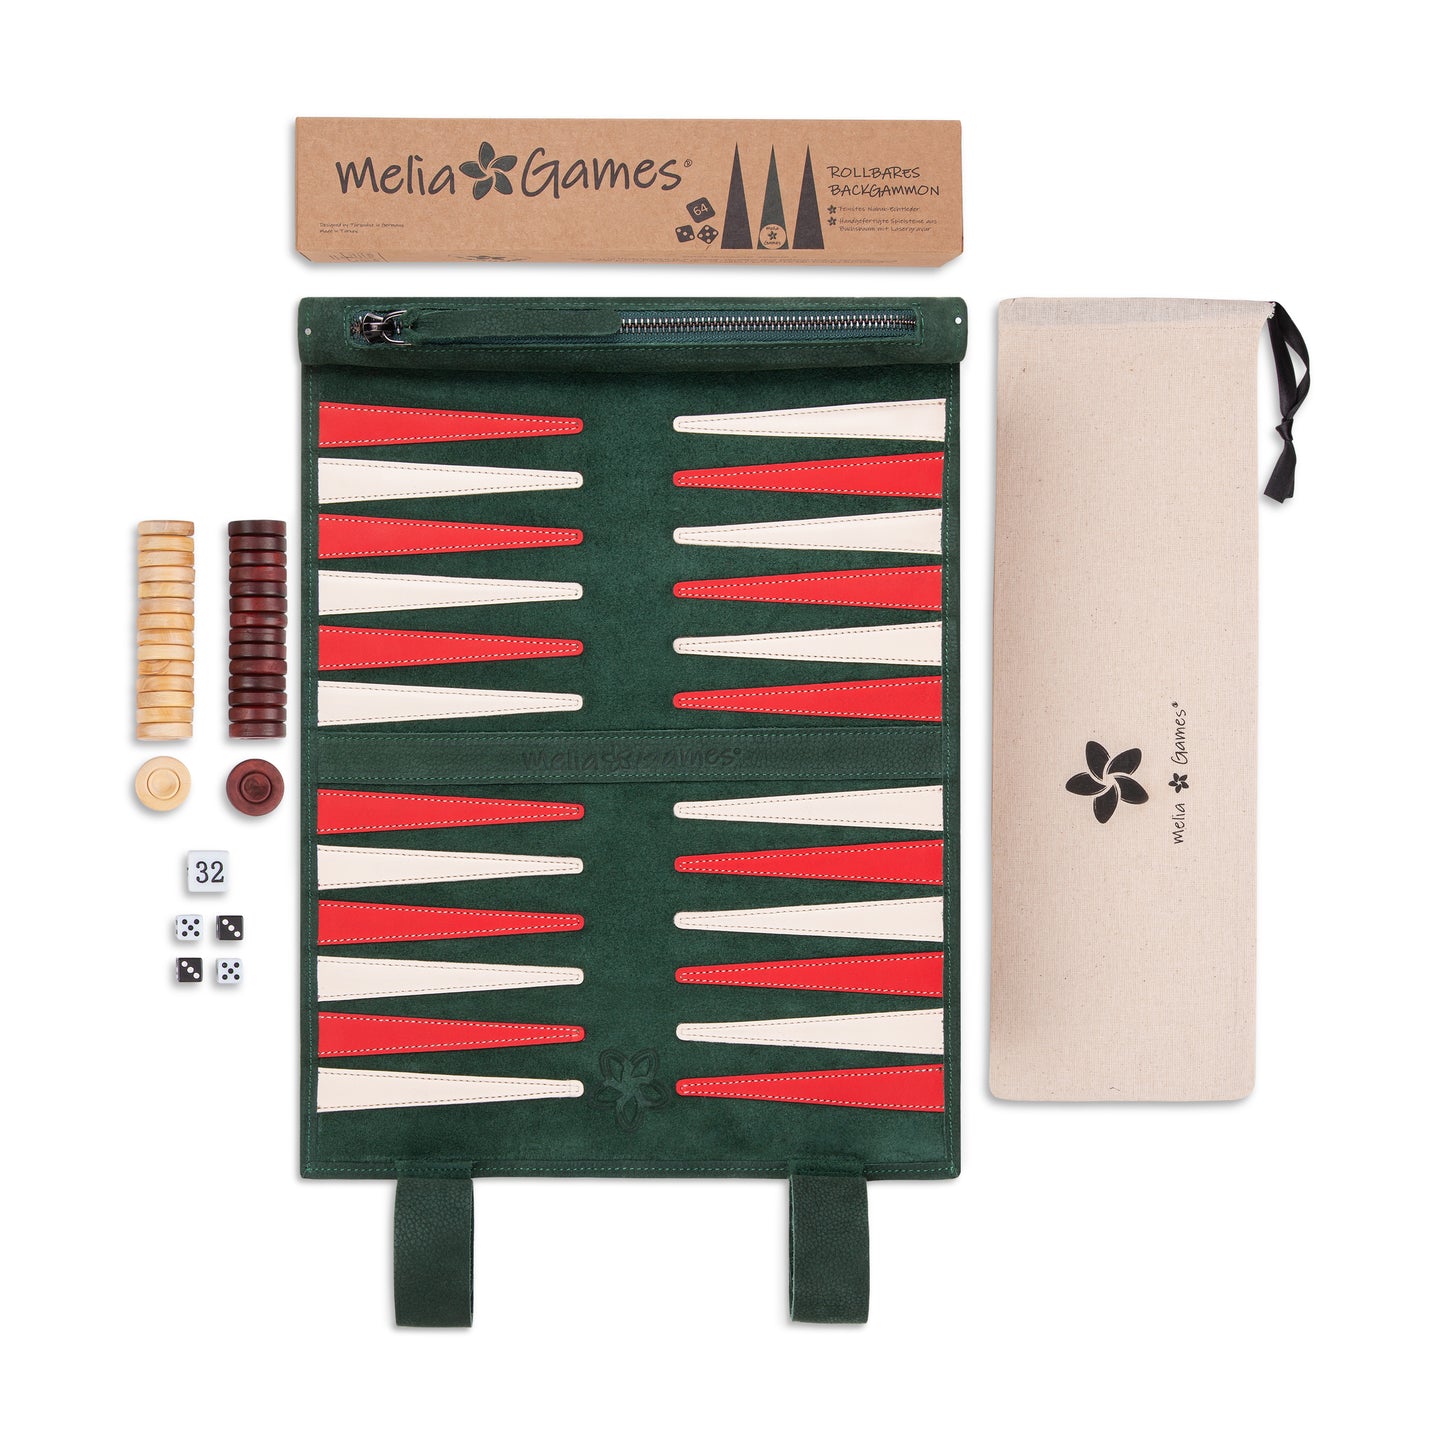 Roll up Leather Backgammon Set - Bella Italia - Full Leather Travel Version